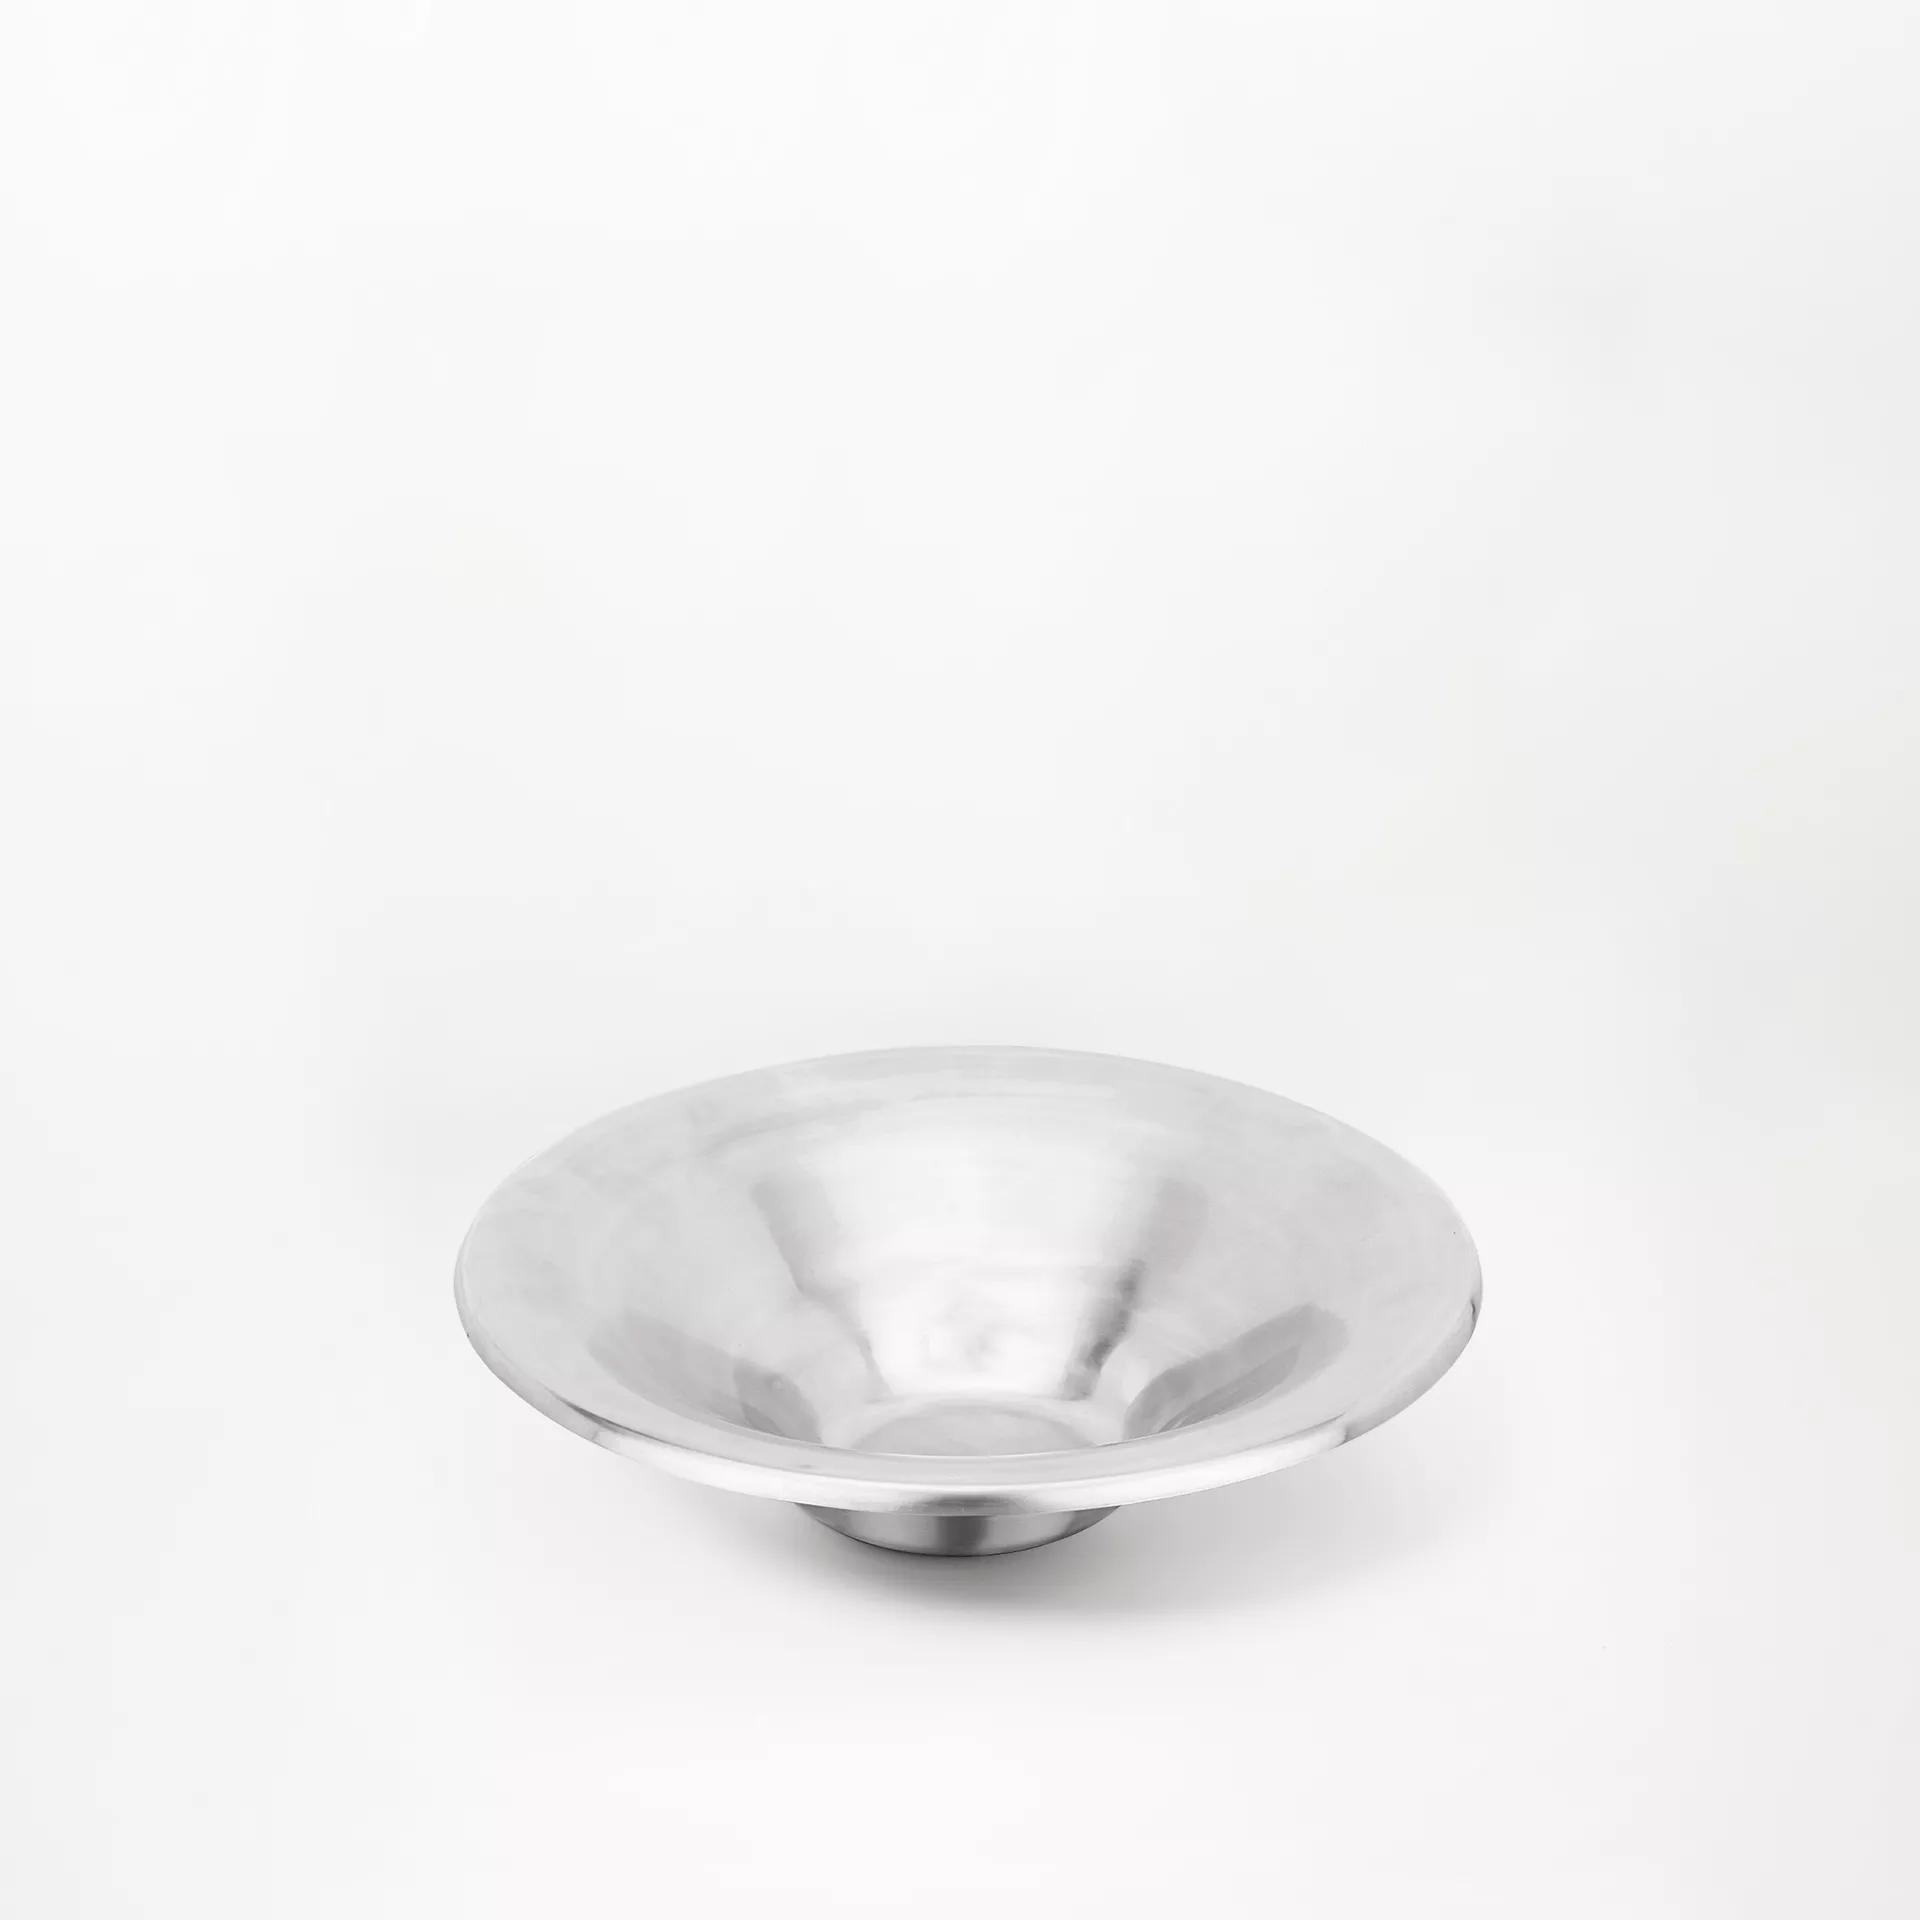 matt silver metal serving bowl